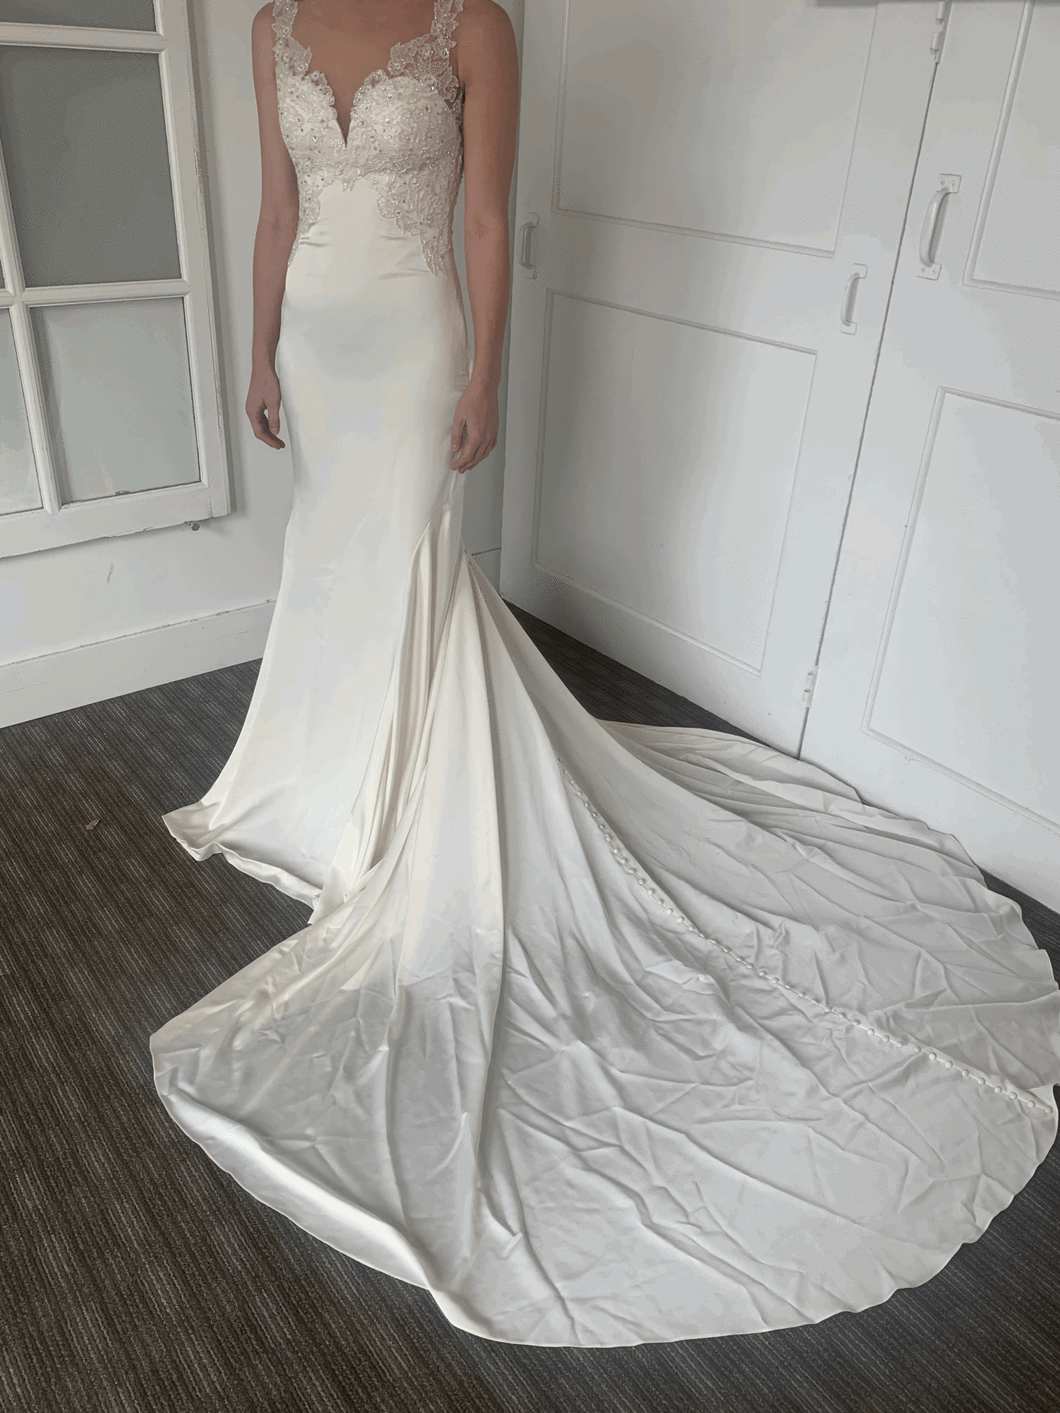 Kenneth Pool 'Monica' wedding dress size-02 NEW